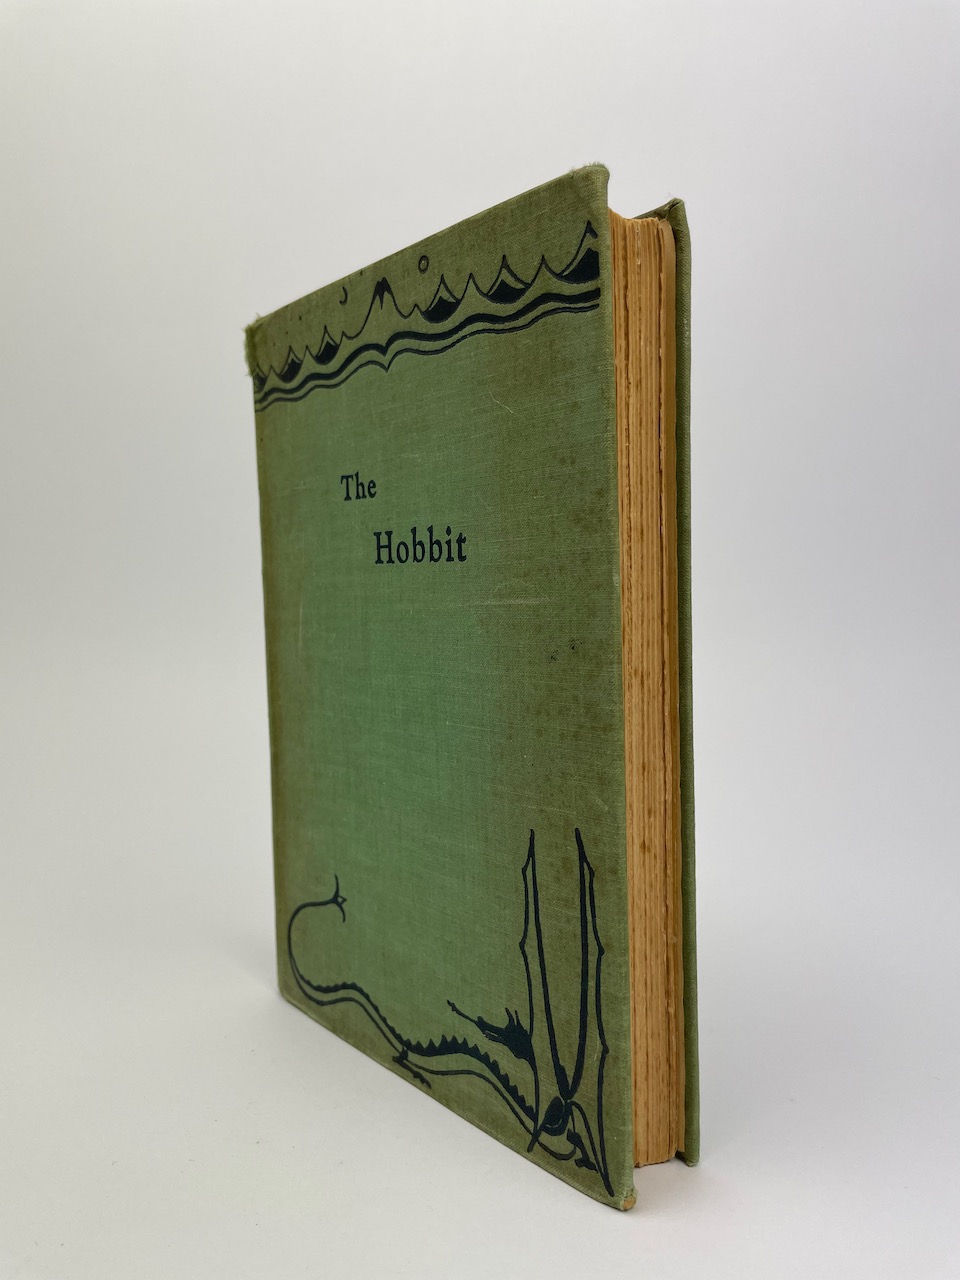 
The Hobbit, George Allen & Unwin, 1937 1st UK Edition 2nd impression 3